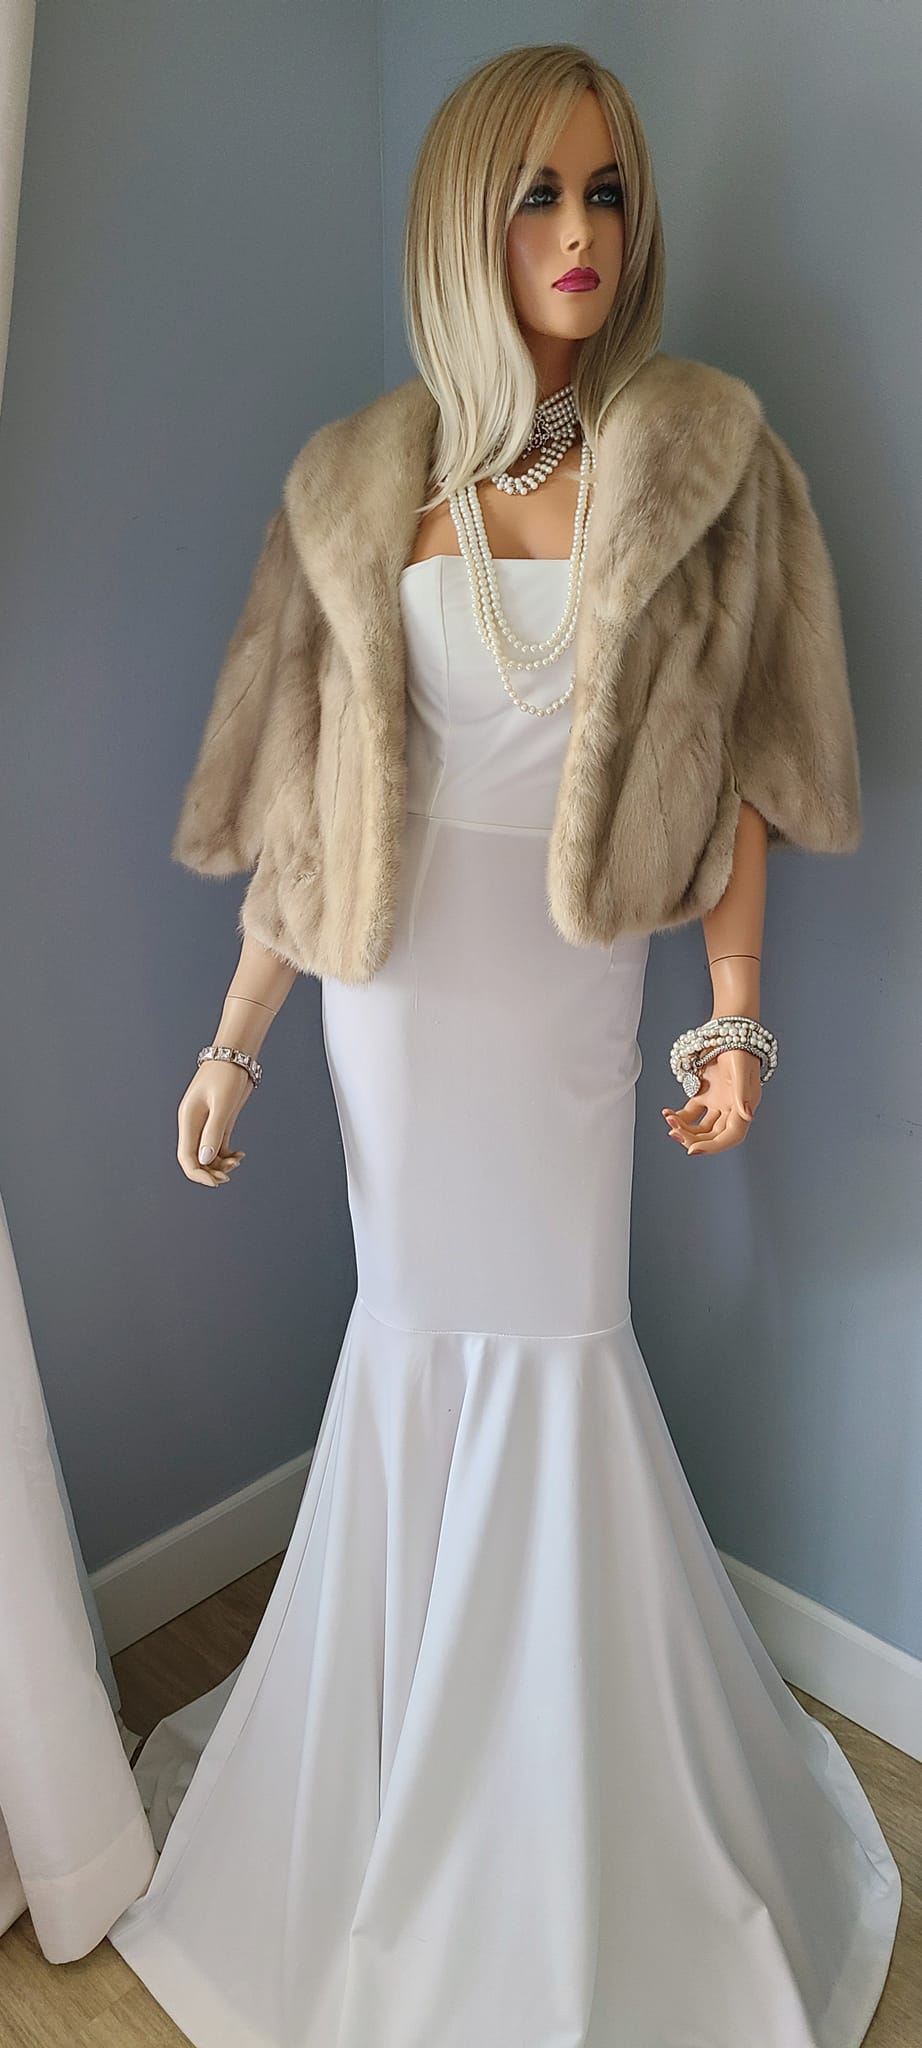 Luxury Vintage Mink Fur Stole, Tourmaline Mink Fur Shawl, Bridal Bolero,  Wedding Fur Jacket Cape, Real Fur, Old Hollywood Glamour Fur, Great Gatsby